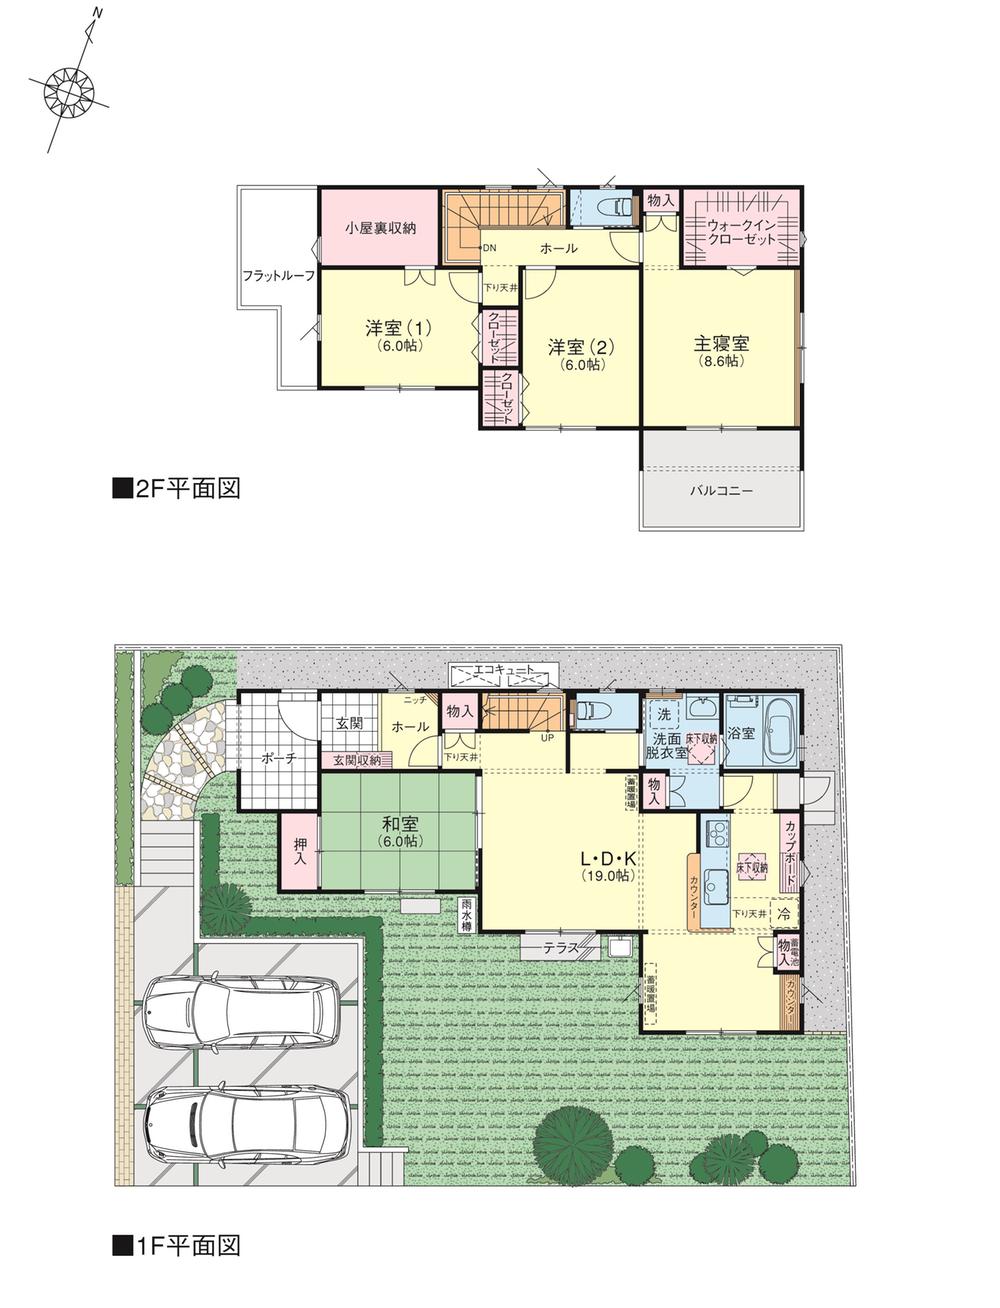 Floor plan. (No.2), Price 29,900,000 yen, 4LDK, Land area 203.55 sq m , Building area 117.58 sq m